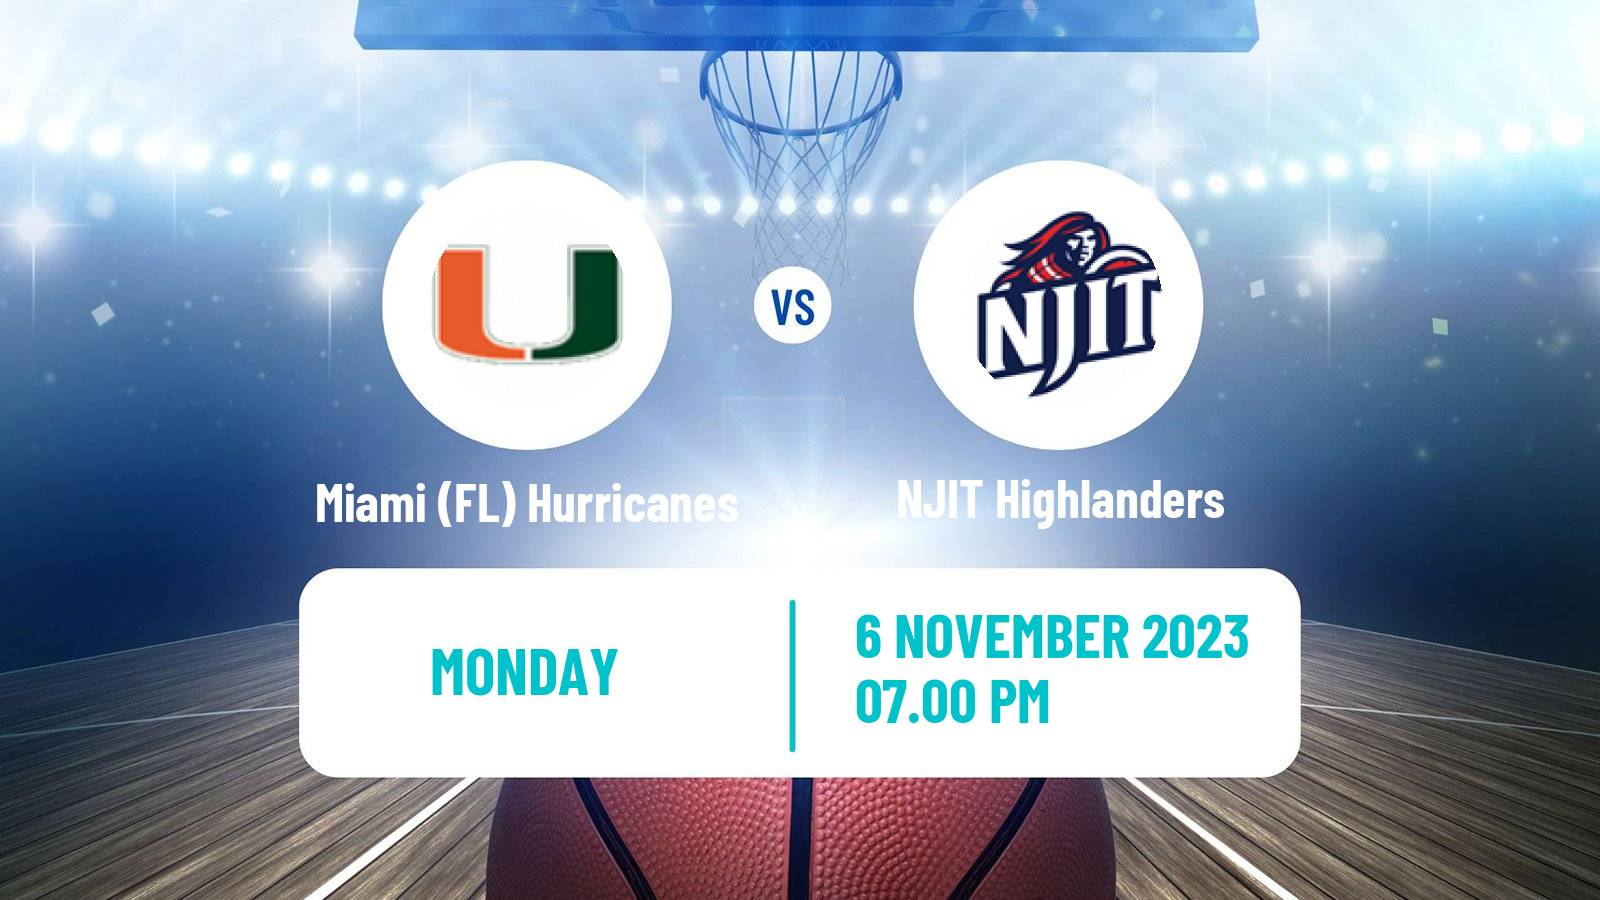 Basketball NCAA College Basketball Miami (FL) Hurricanes - NJIT Highlanders